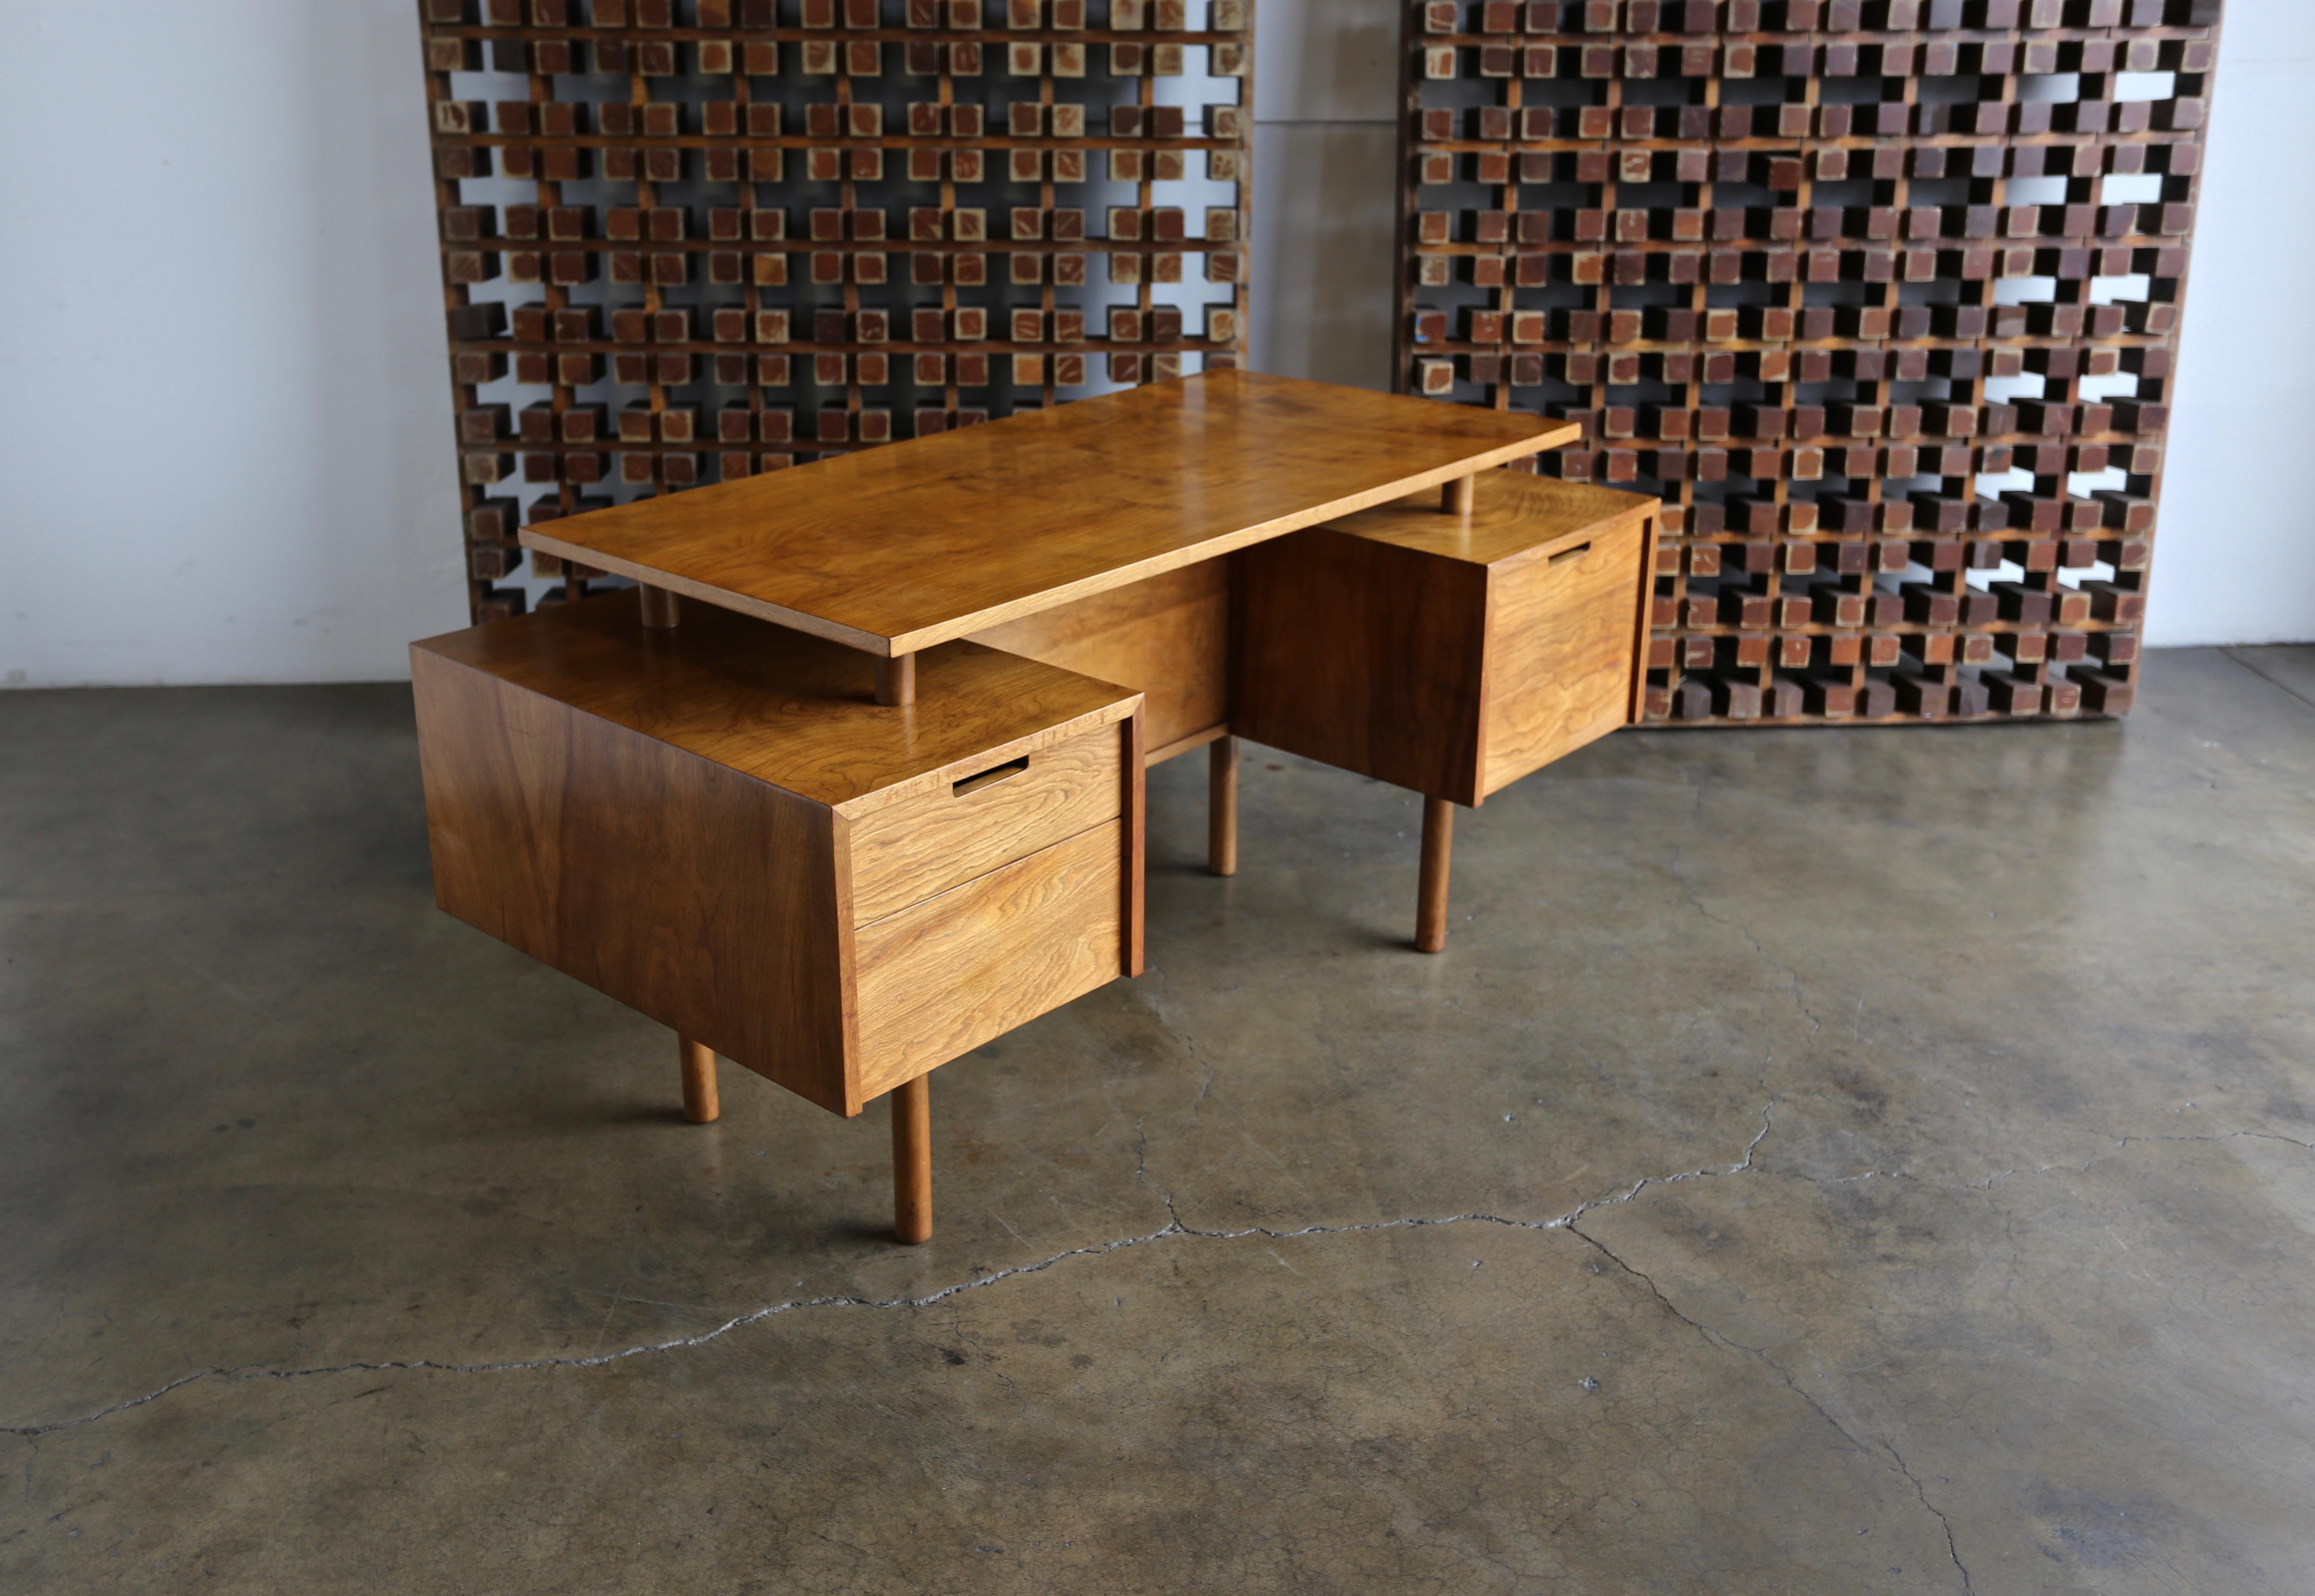 Walnut desk by Milo Baughman for Glenn of California.